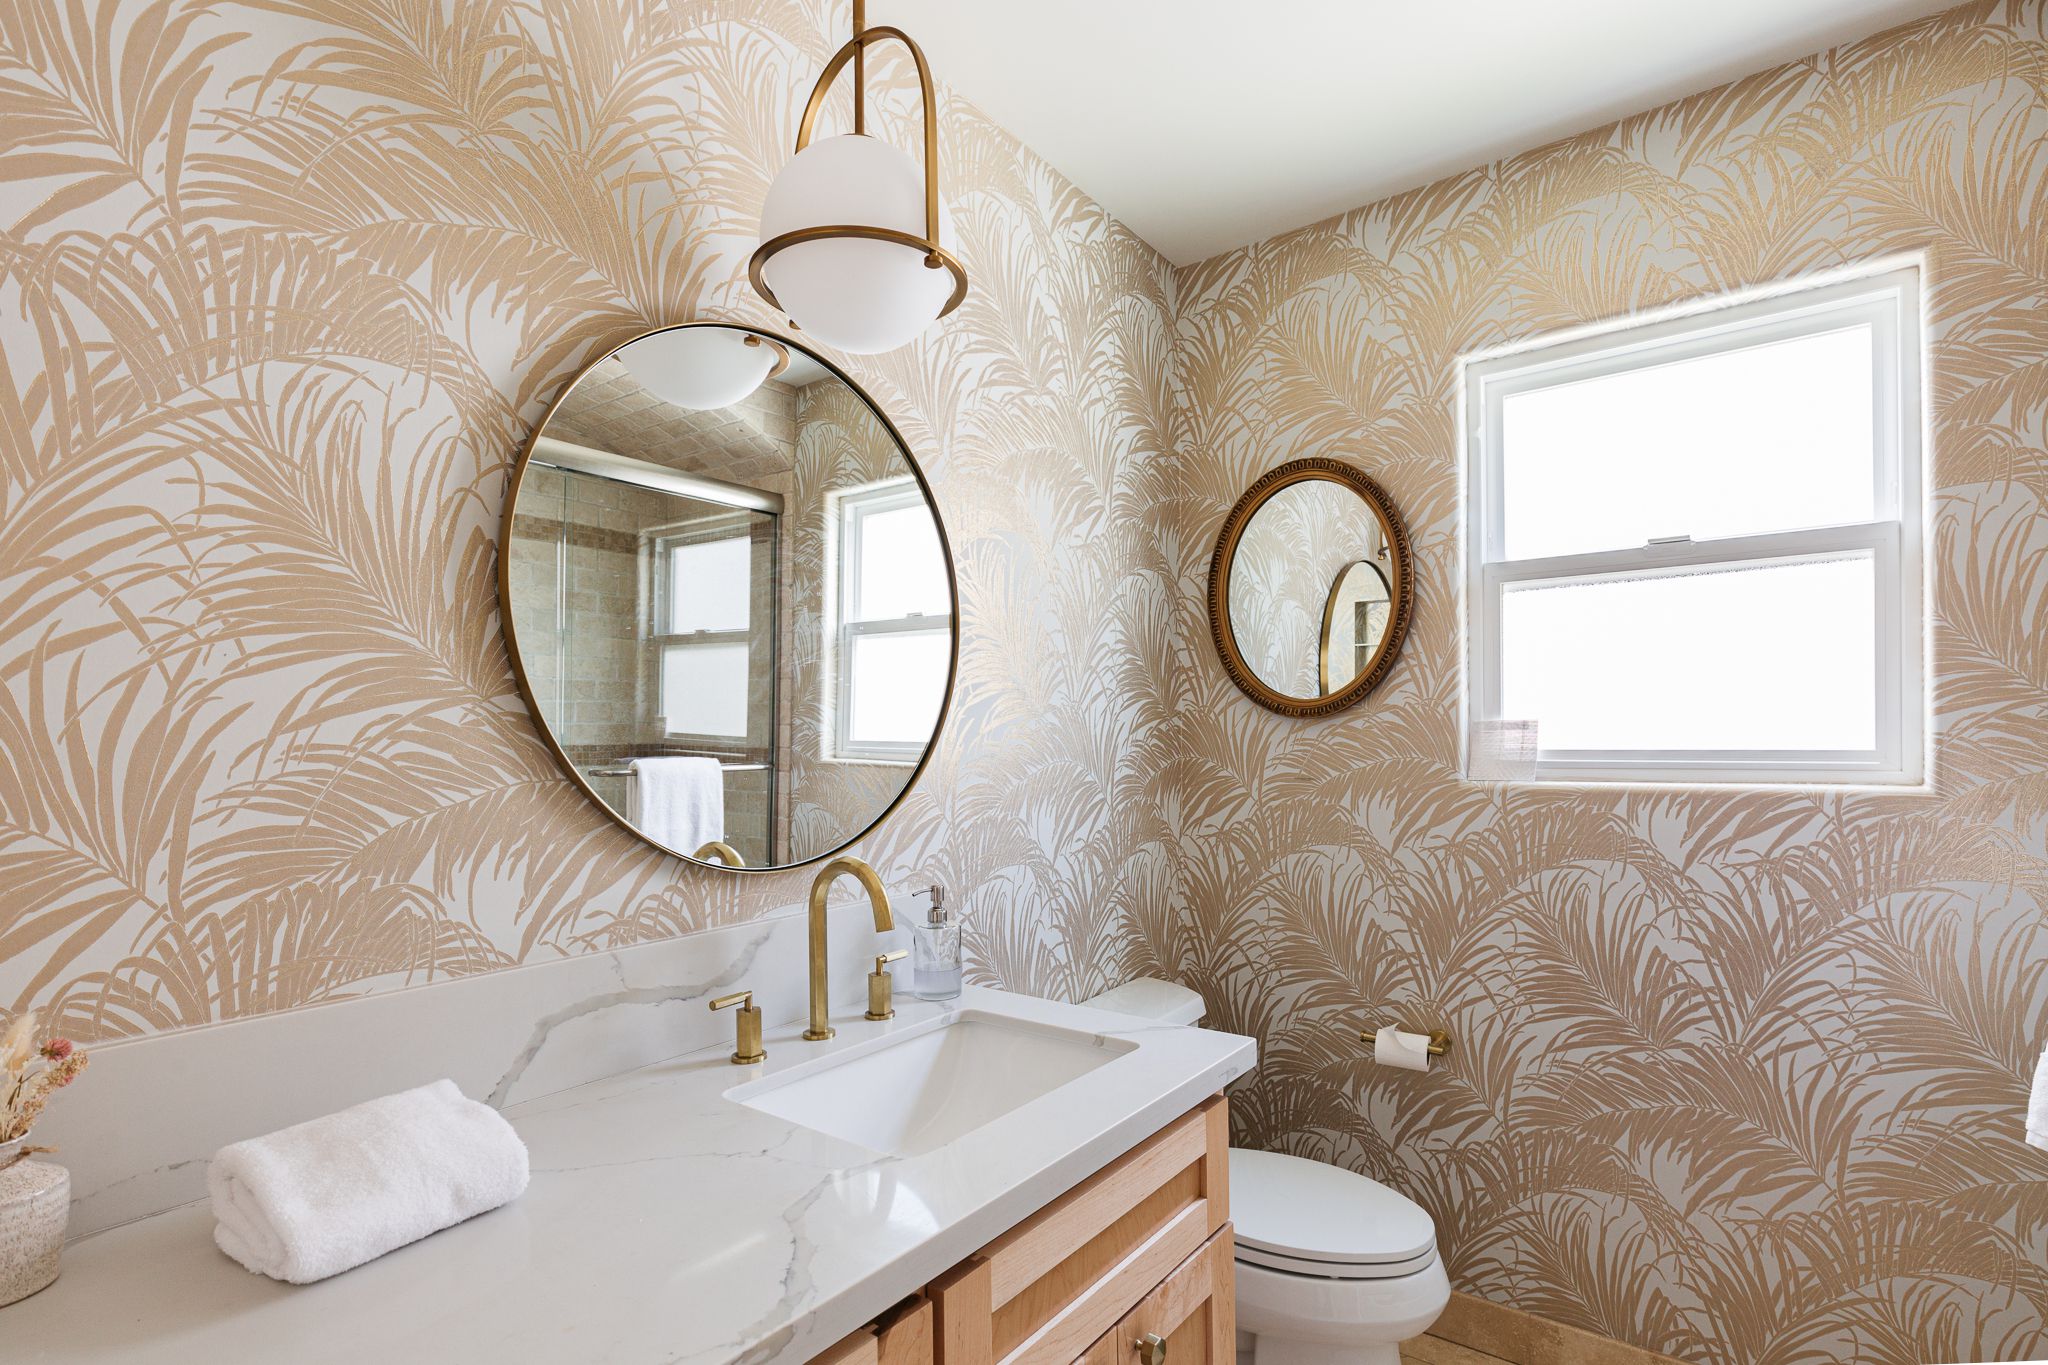 30 Beautiful Bathroom Wallpaper Ideas We Want to Copy